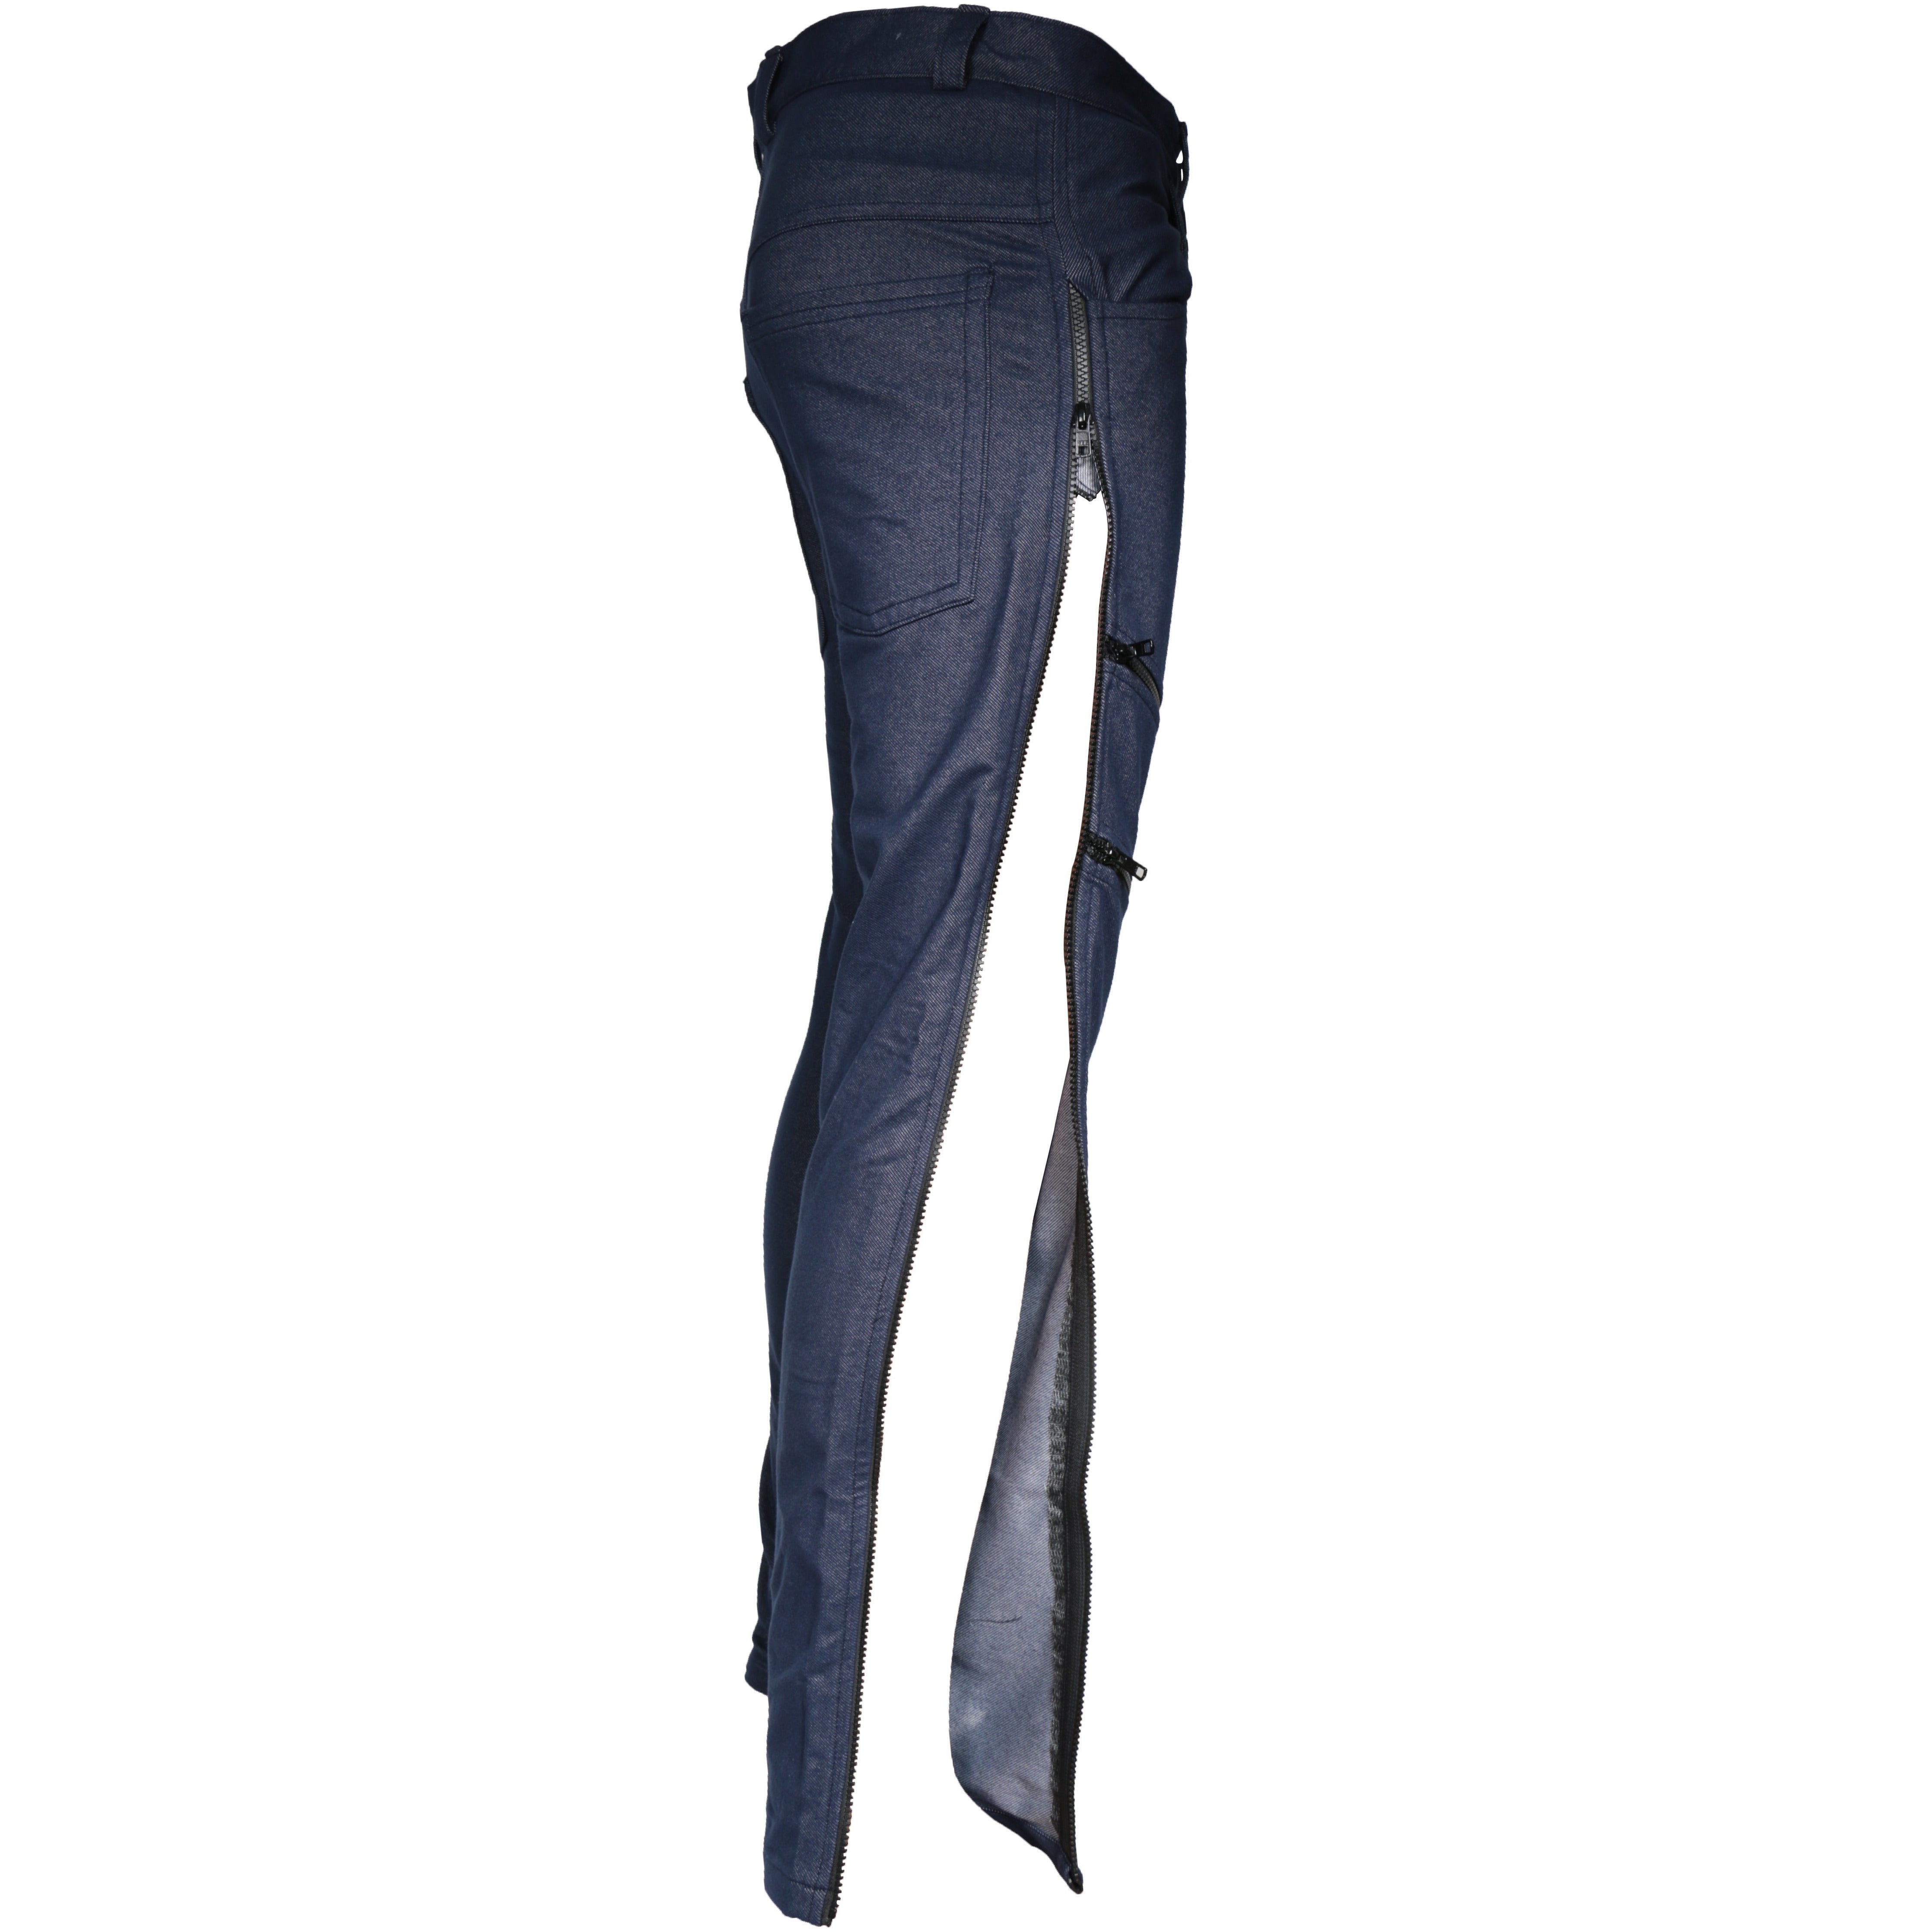 Modern navy  denim jeans with mega zippers